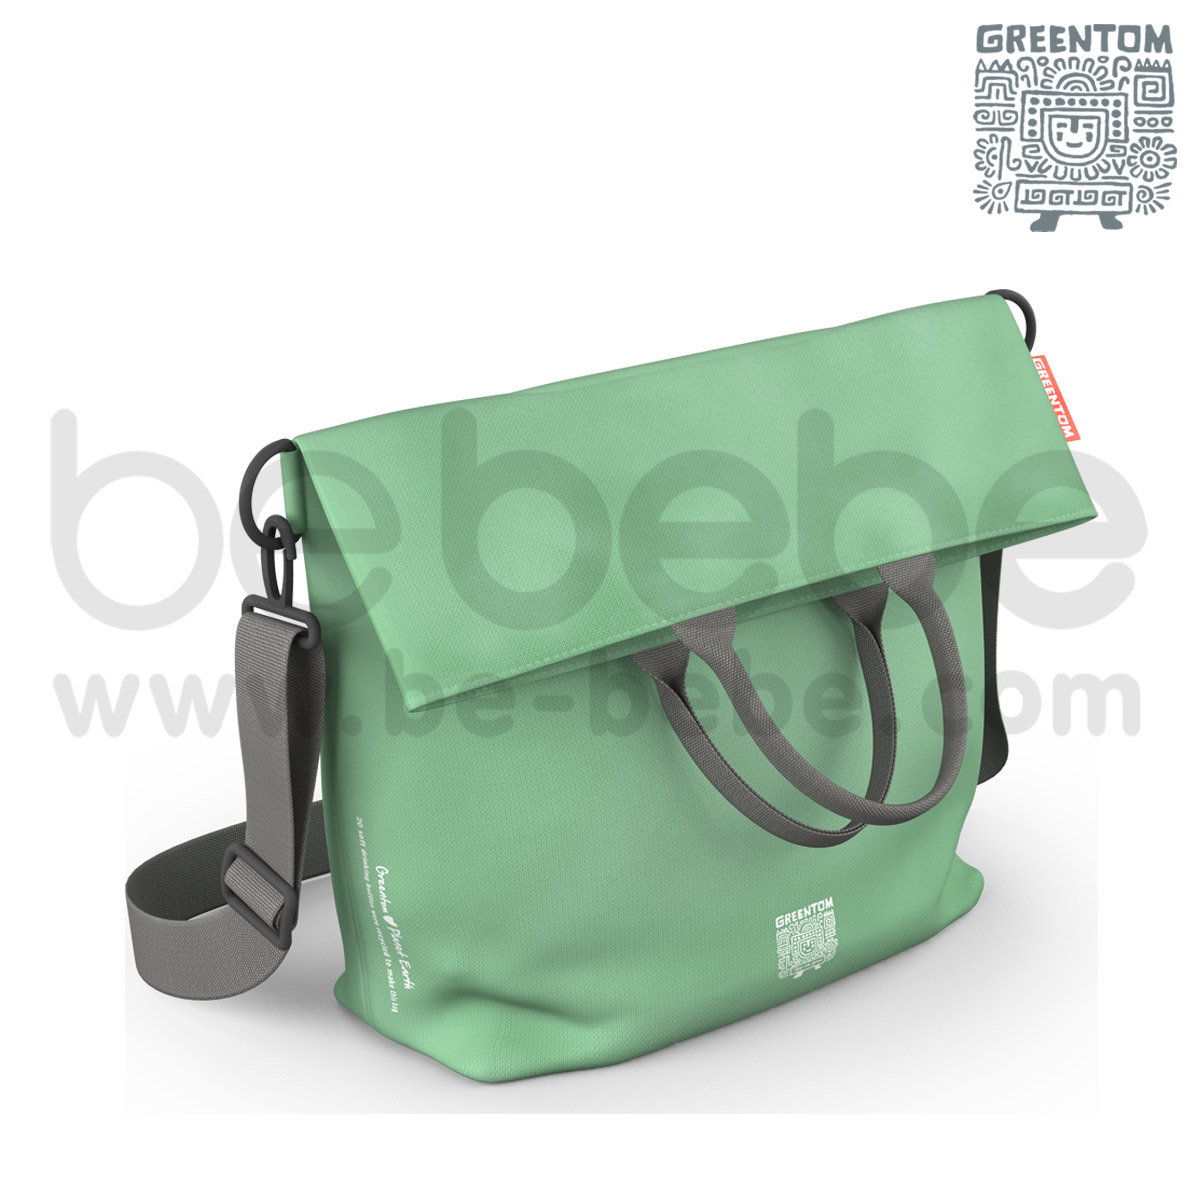 Greentom : Diaper Bag / Mint